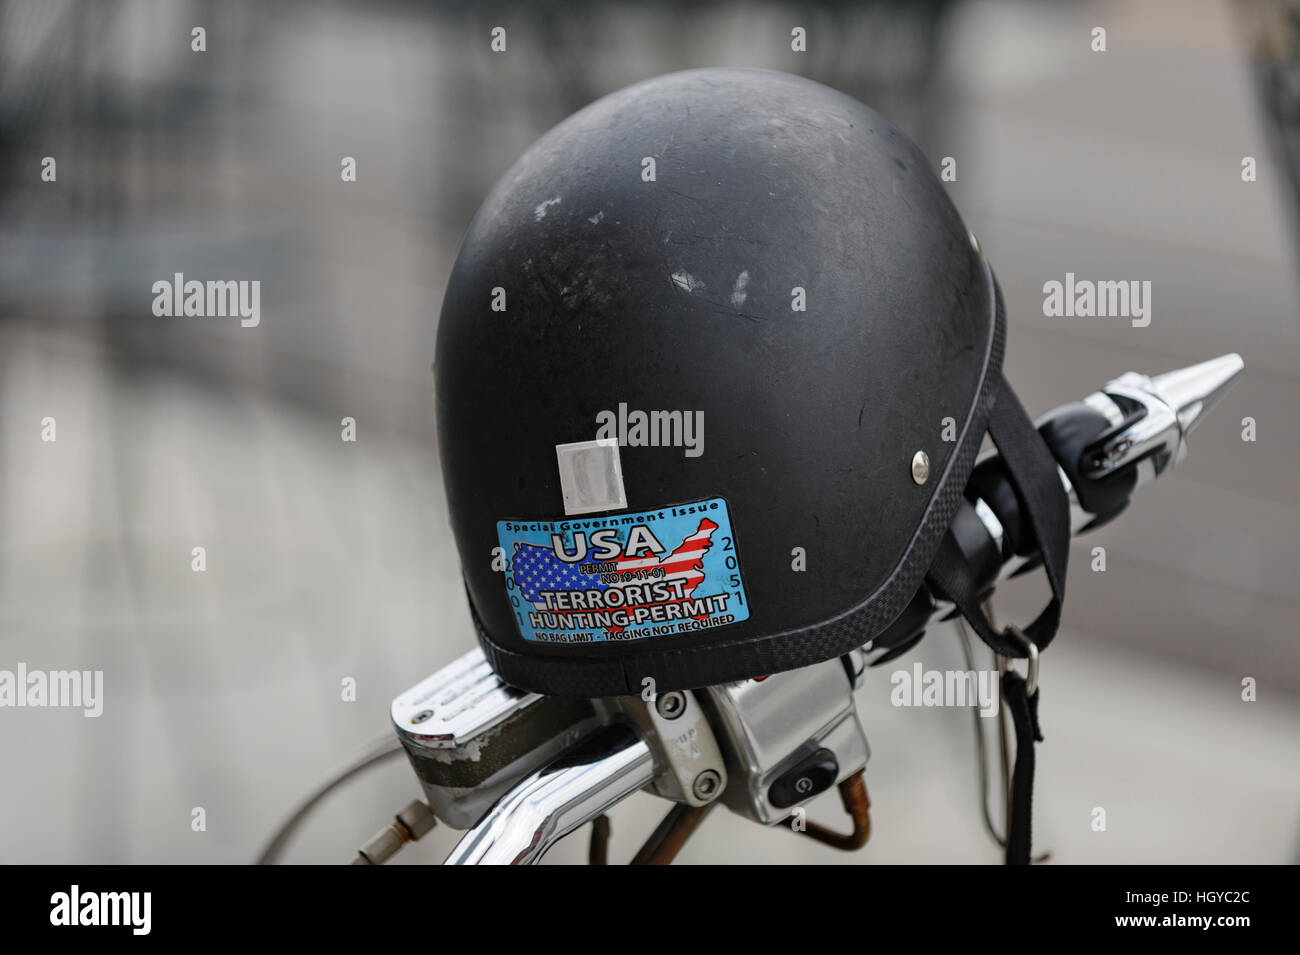 Motorcycle helmet with anti-terrorism sticker, Memphis, Tennessee, USA Stock Photo